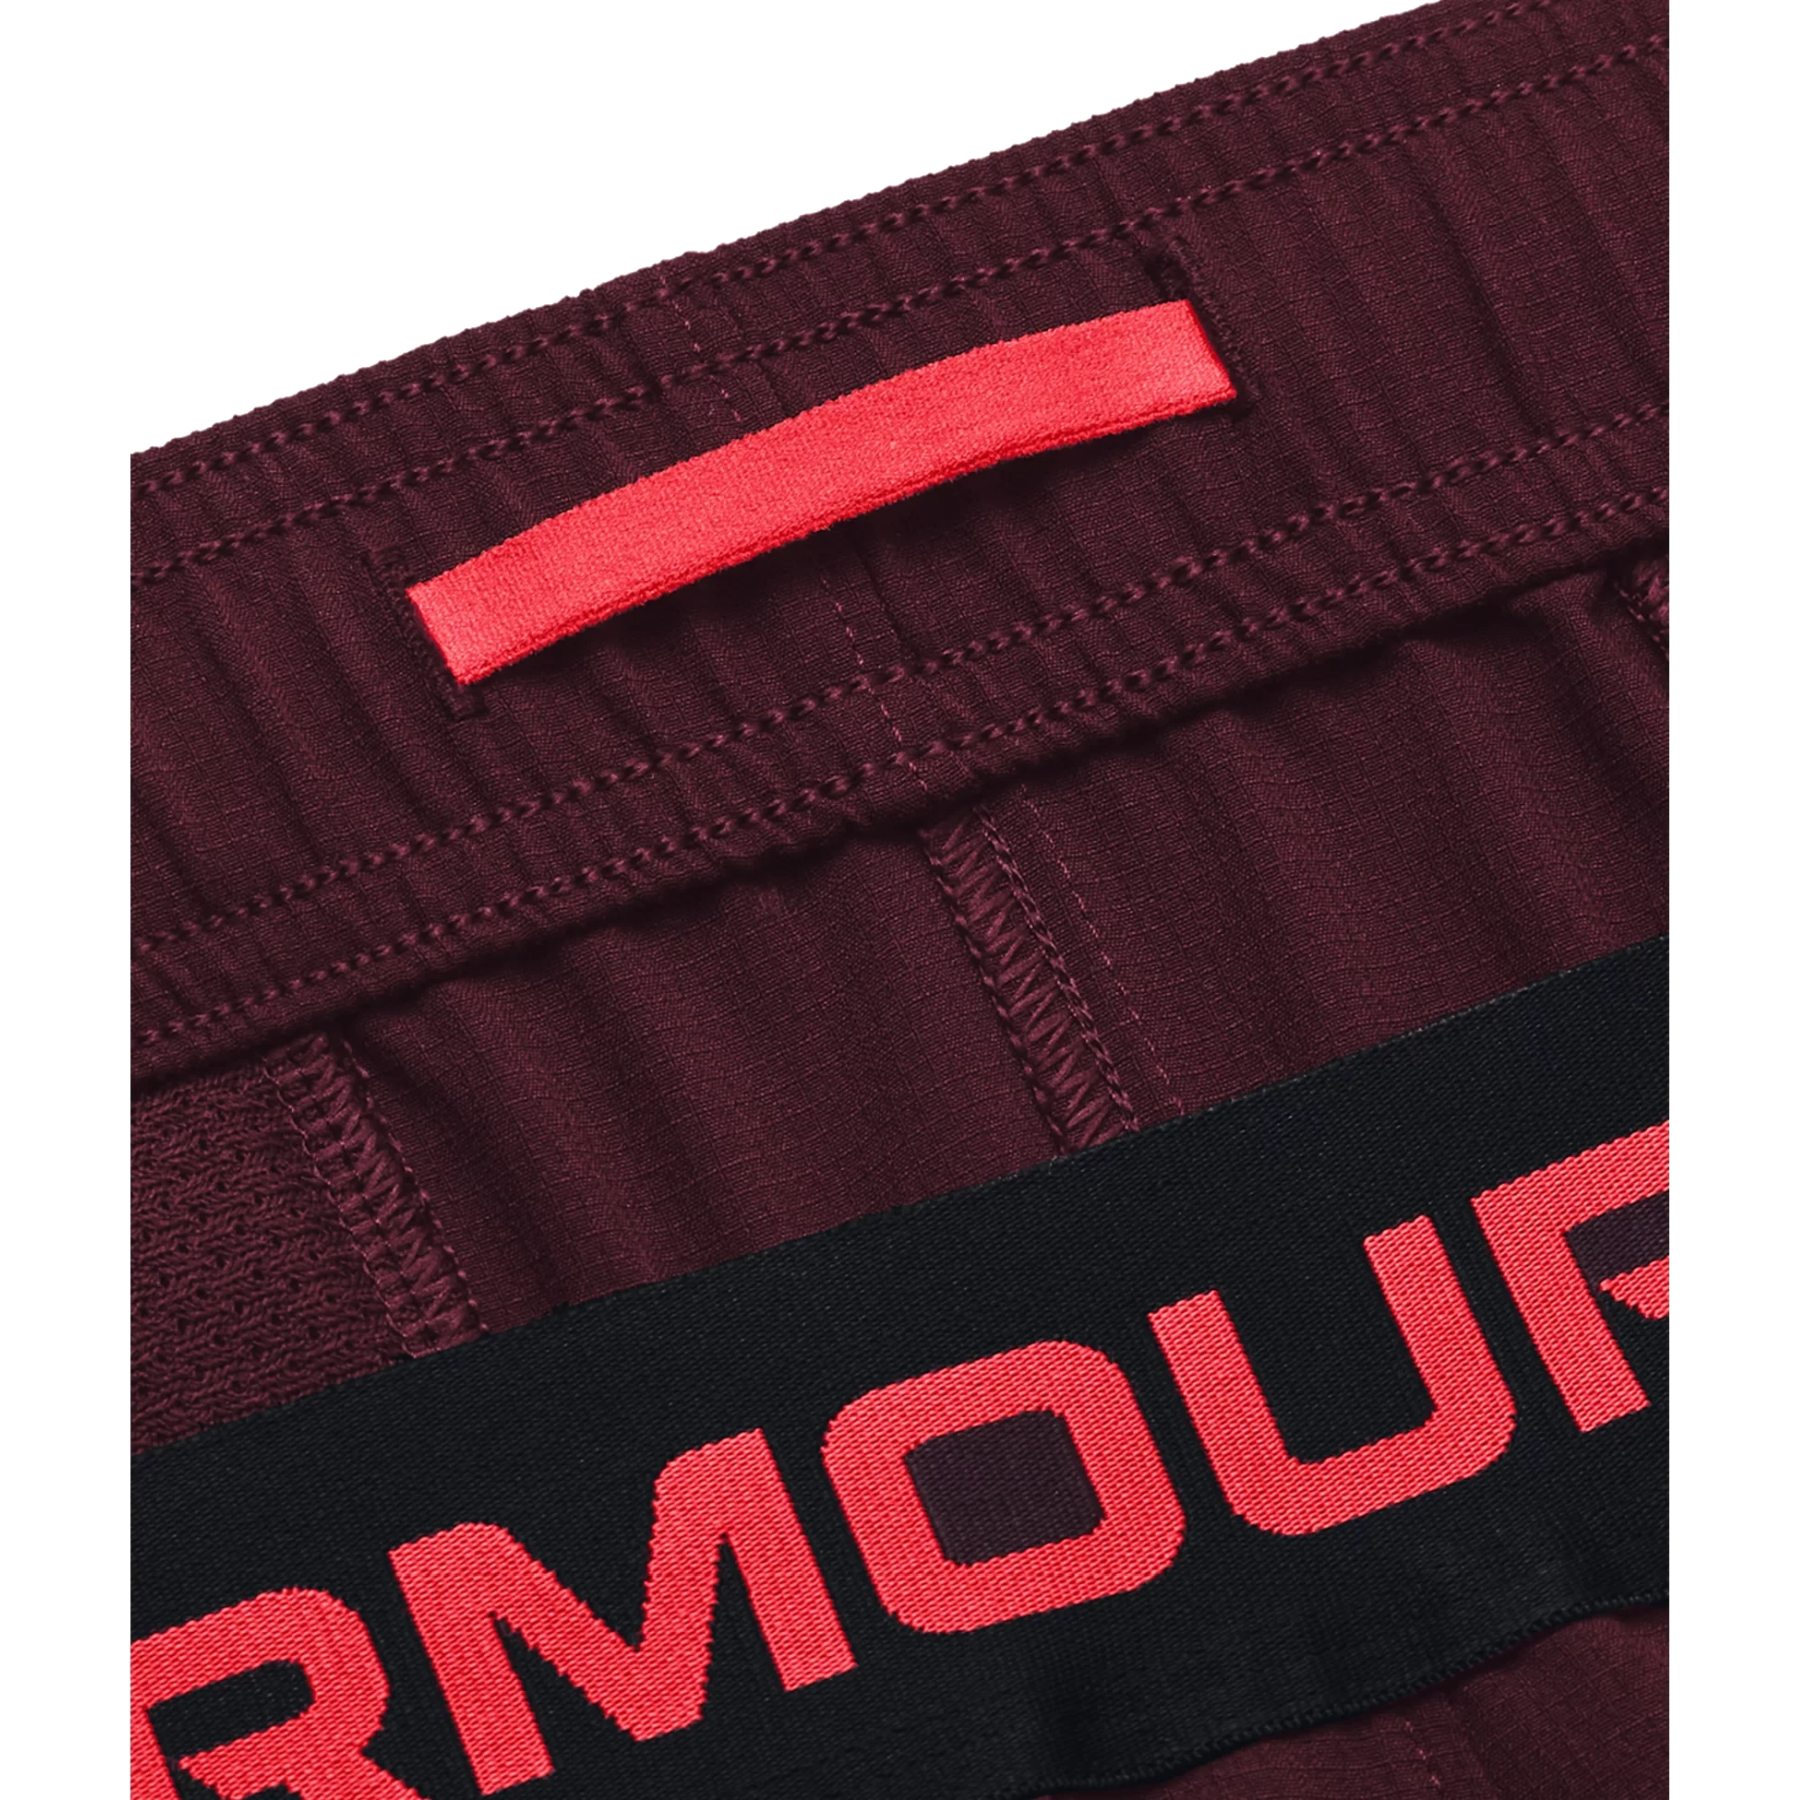 Under Armour - Vanish Woven 6in Shorts Men dark maroon at Sport Bittl Shop